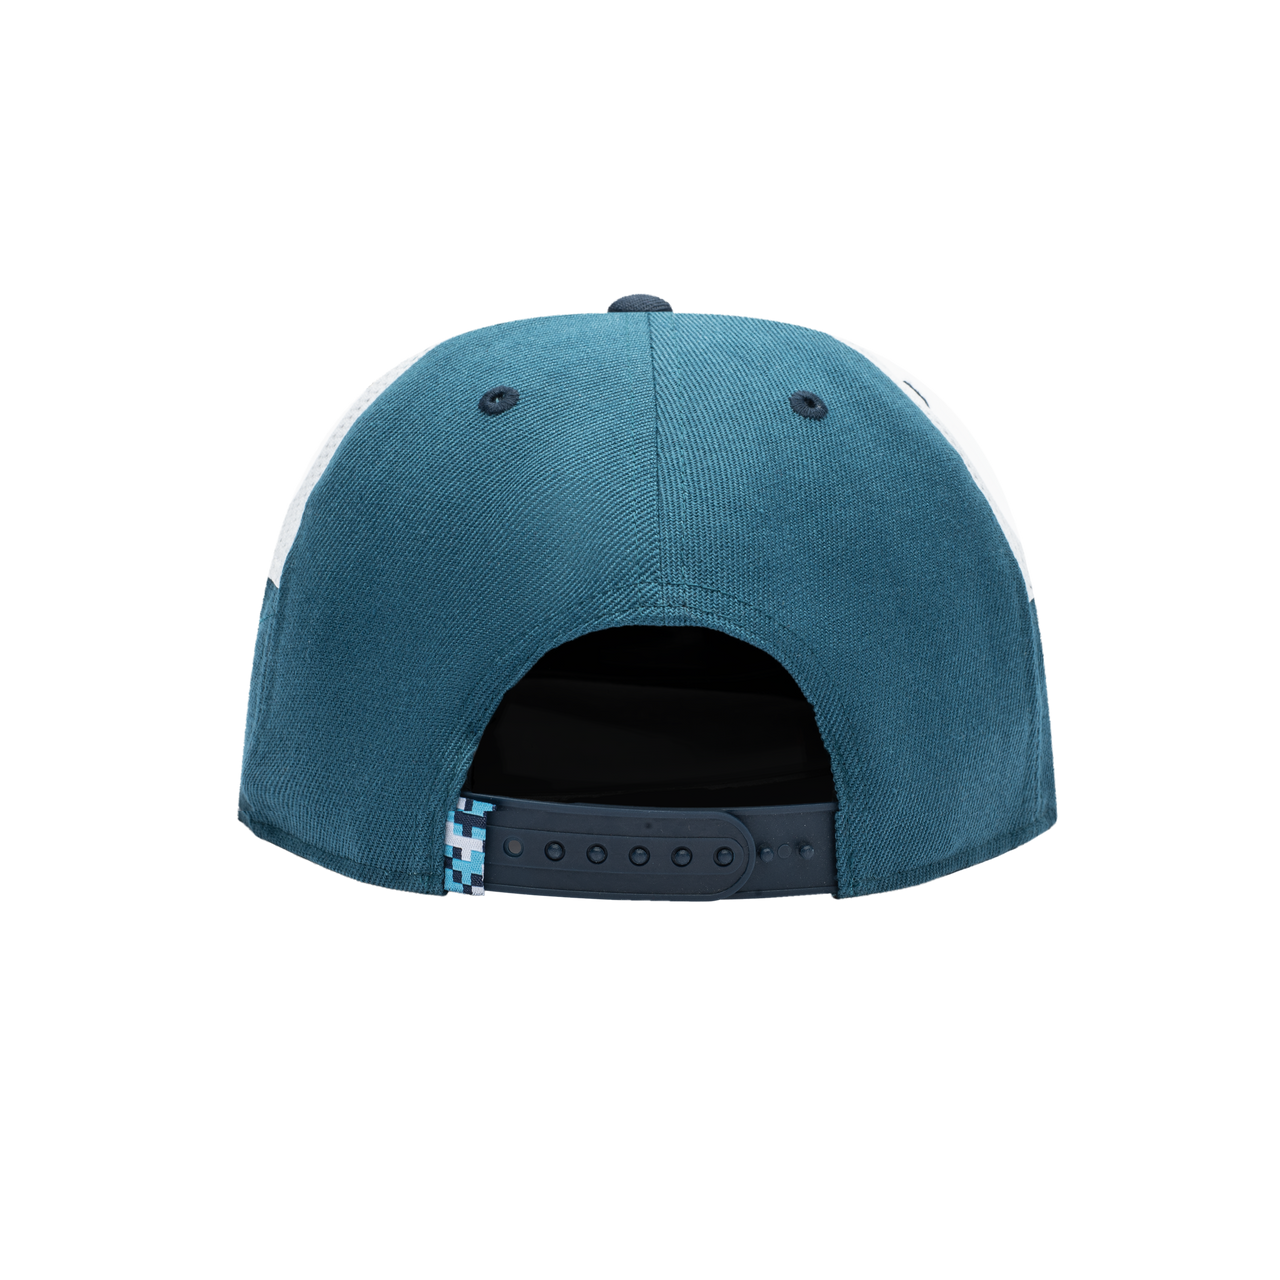 Manchester City 'Mondrian' Adjustable Snapback Hat - Navy Blue